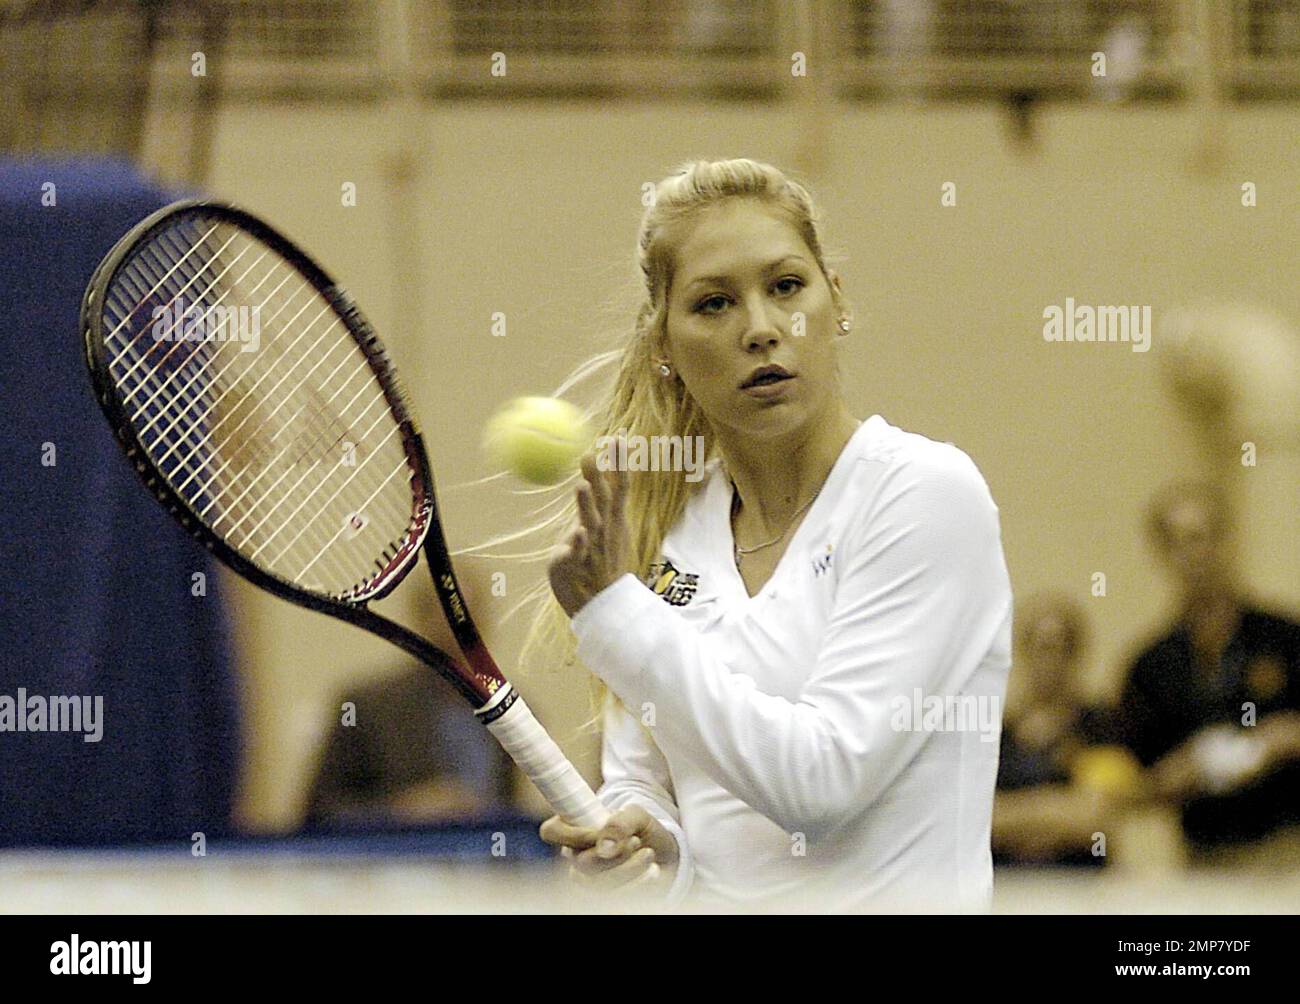 Anna kournikova at wimbledon hi-res stock photography and images - Page 2 -  Alamy